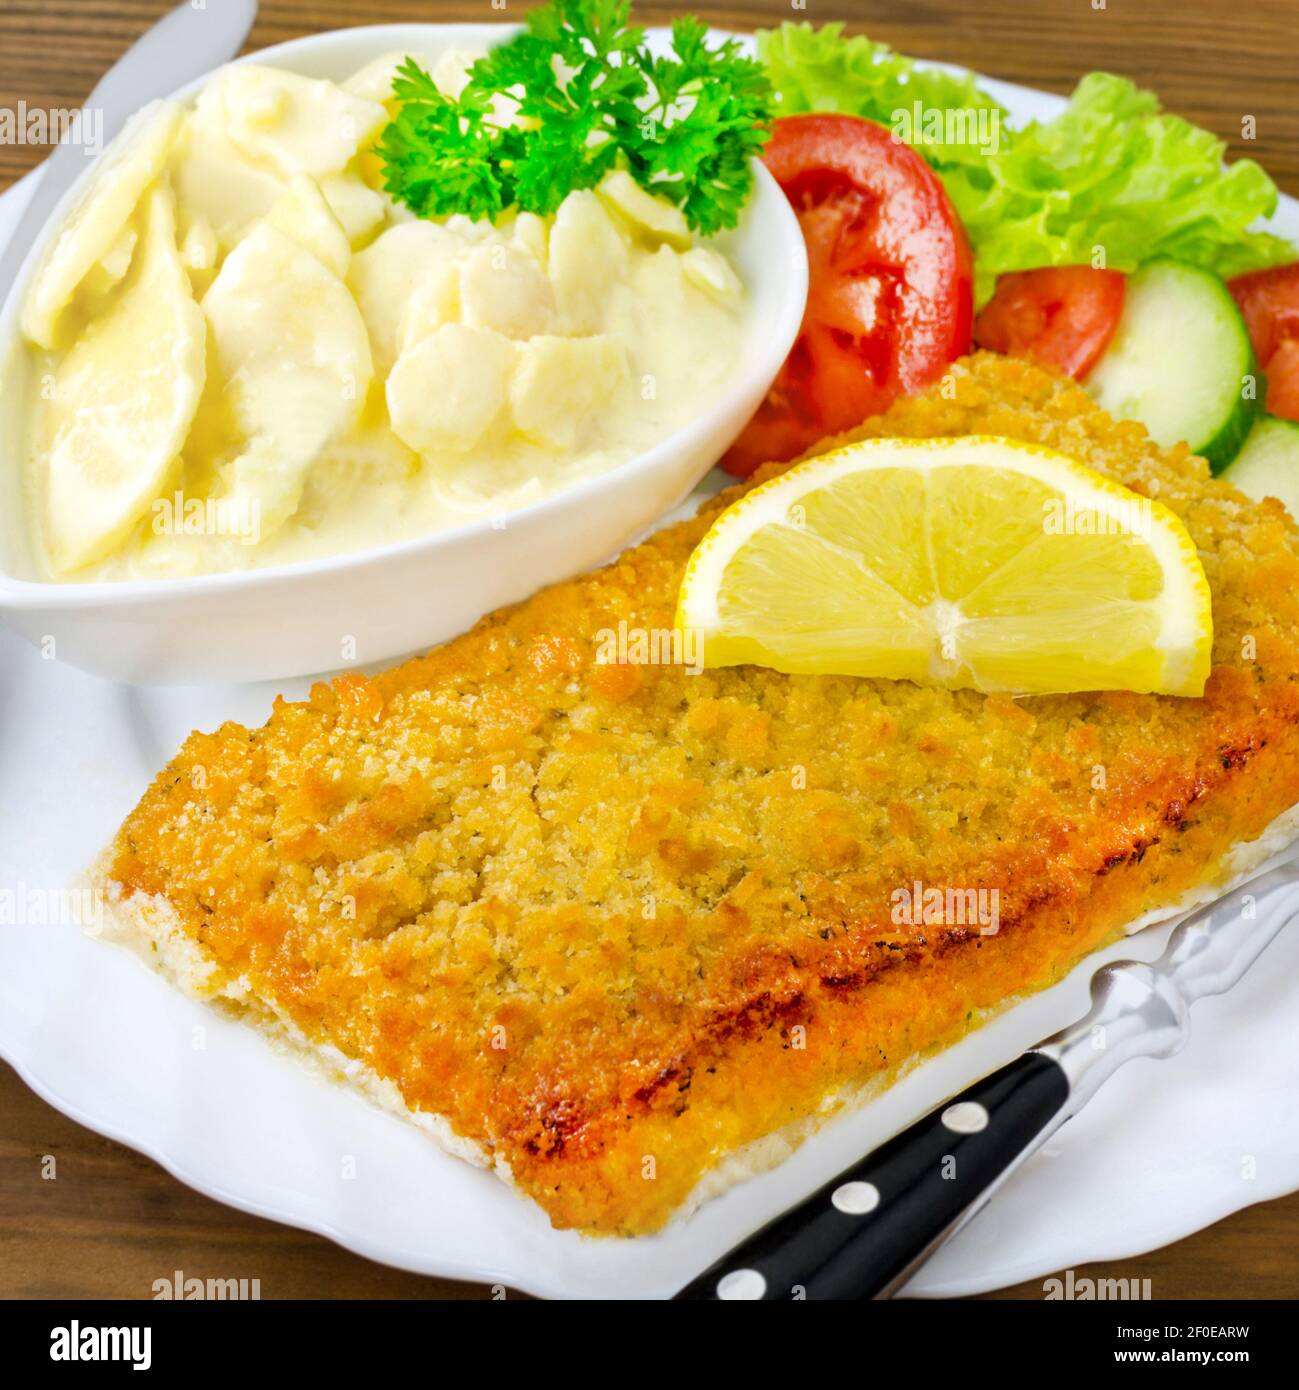 Potato salad and baked fish Stock Photo